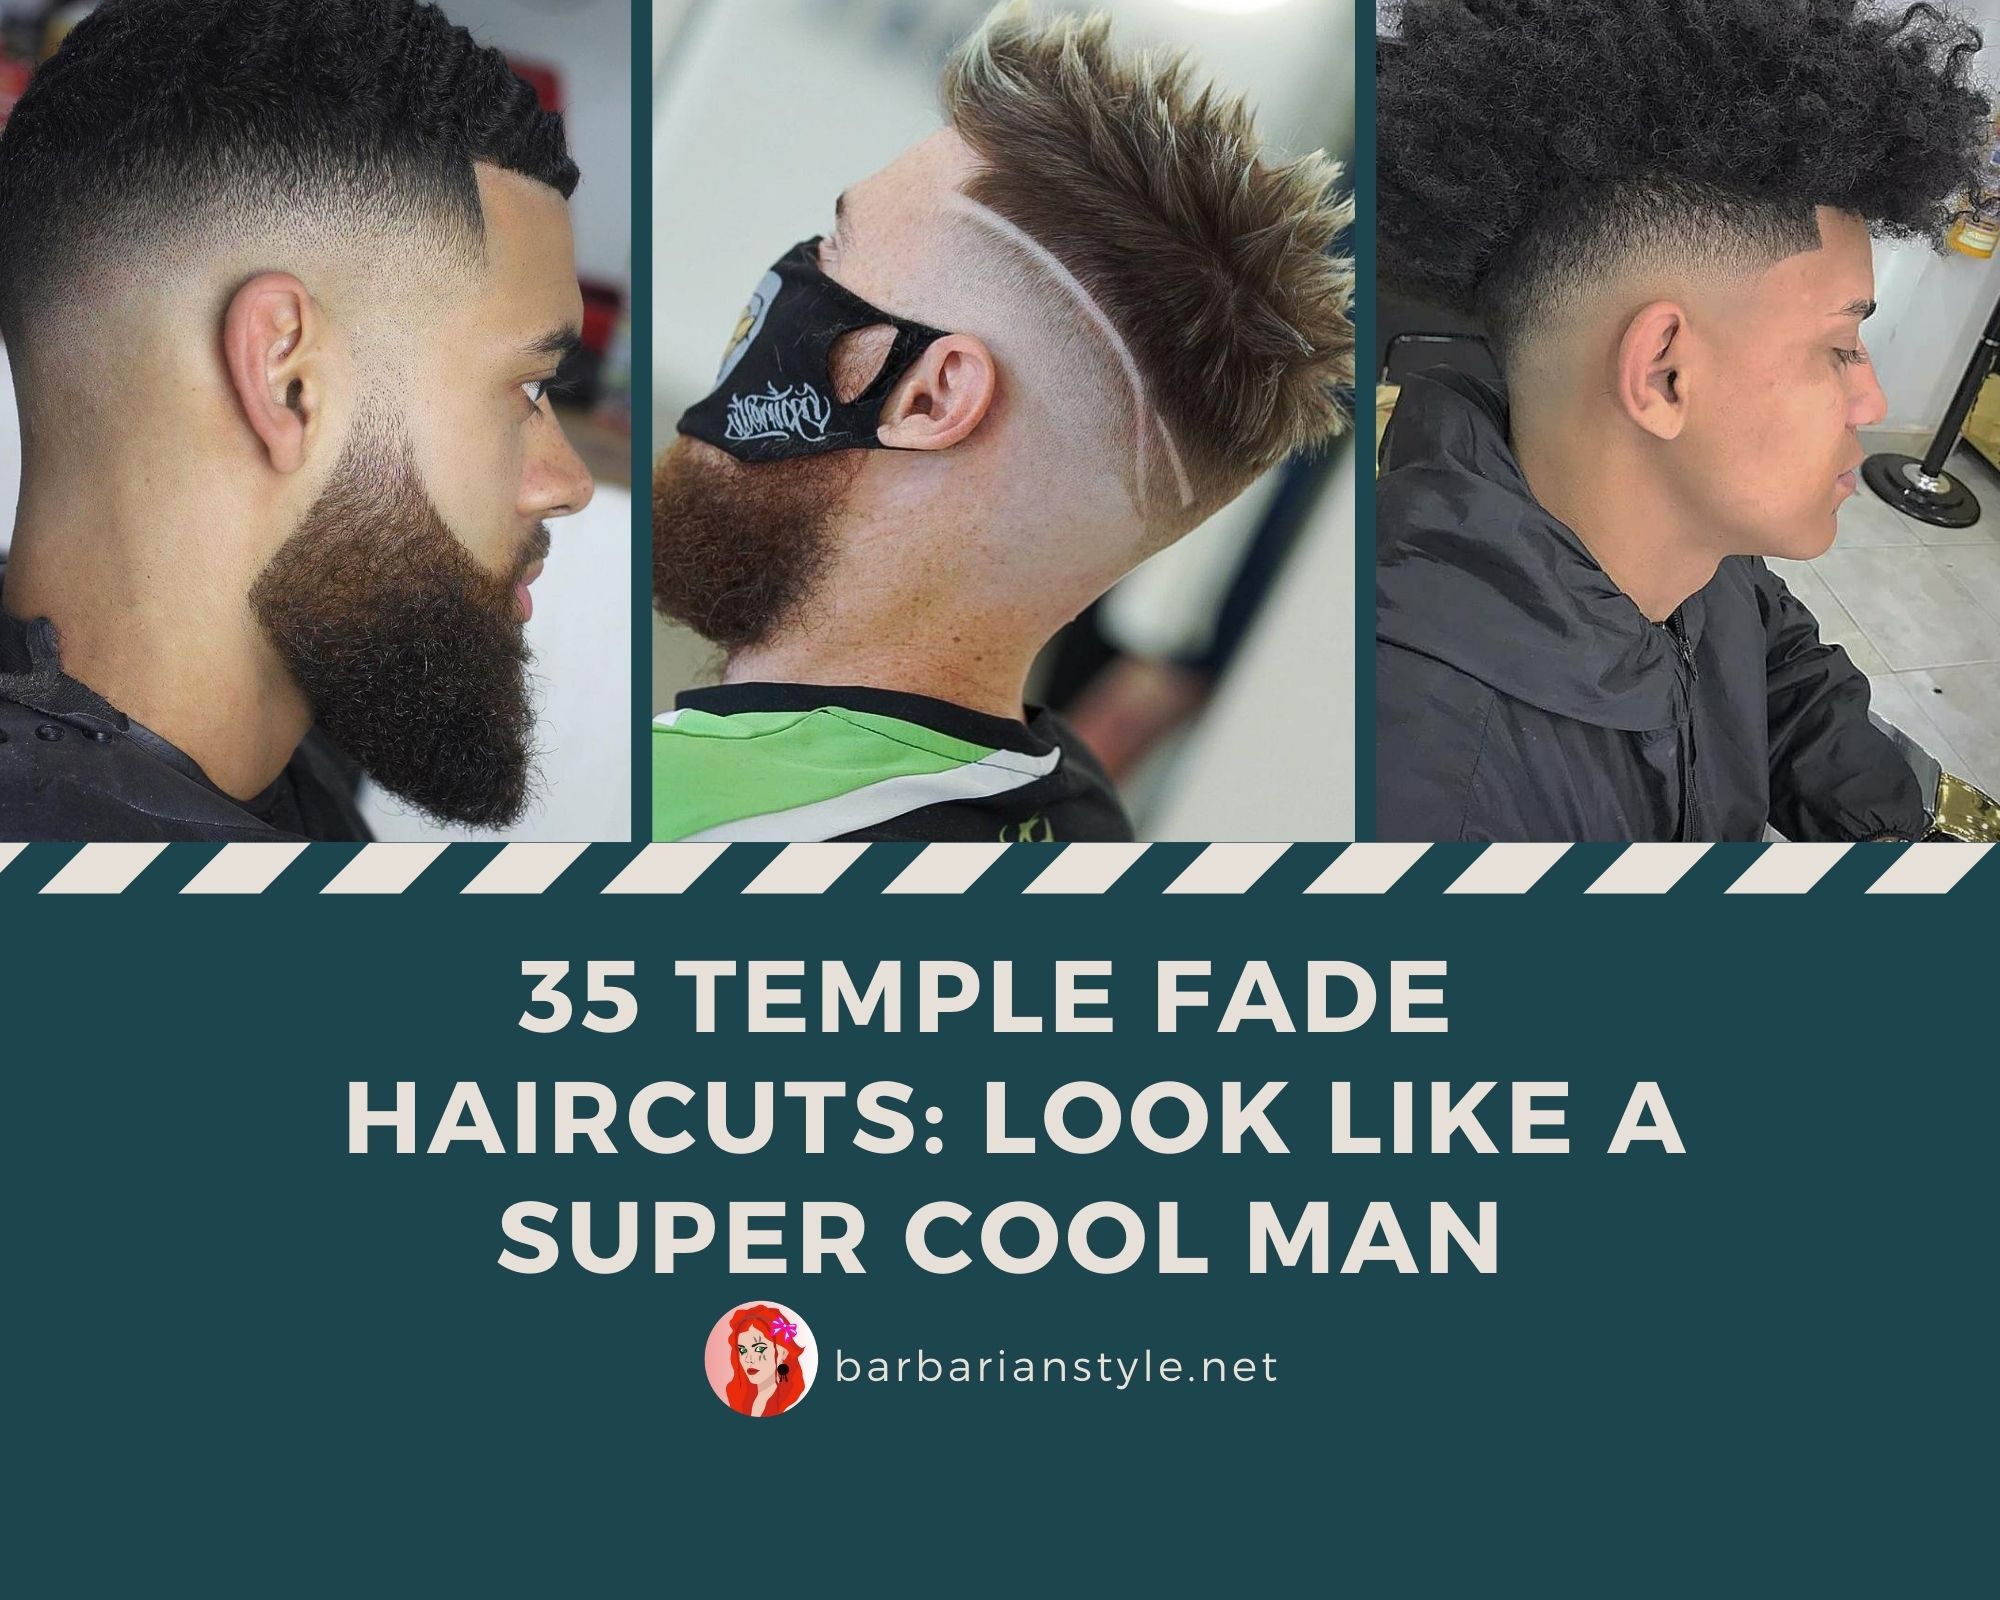 35 Temple Fade Haircuts: Look Like a Super Cool Man.